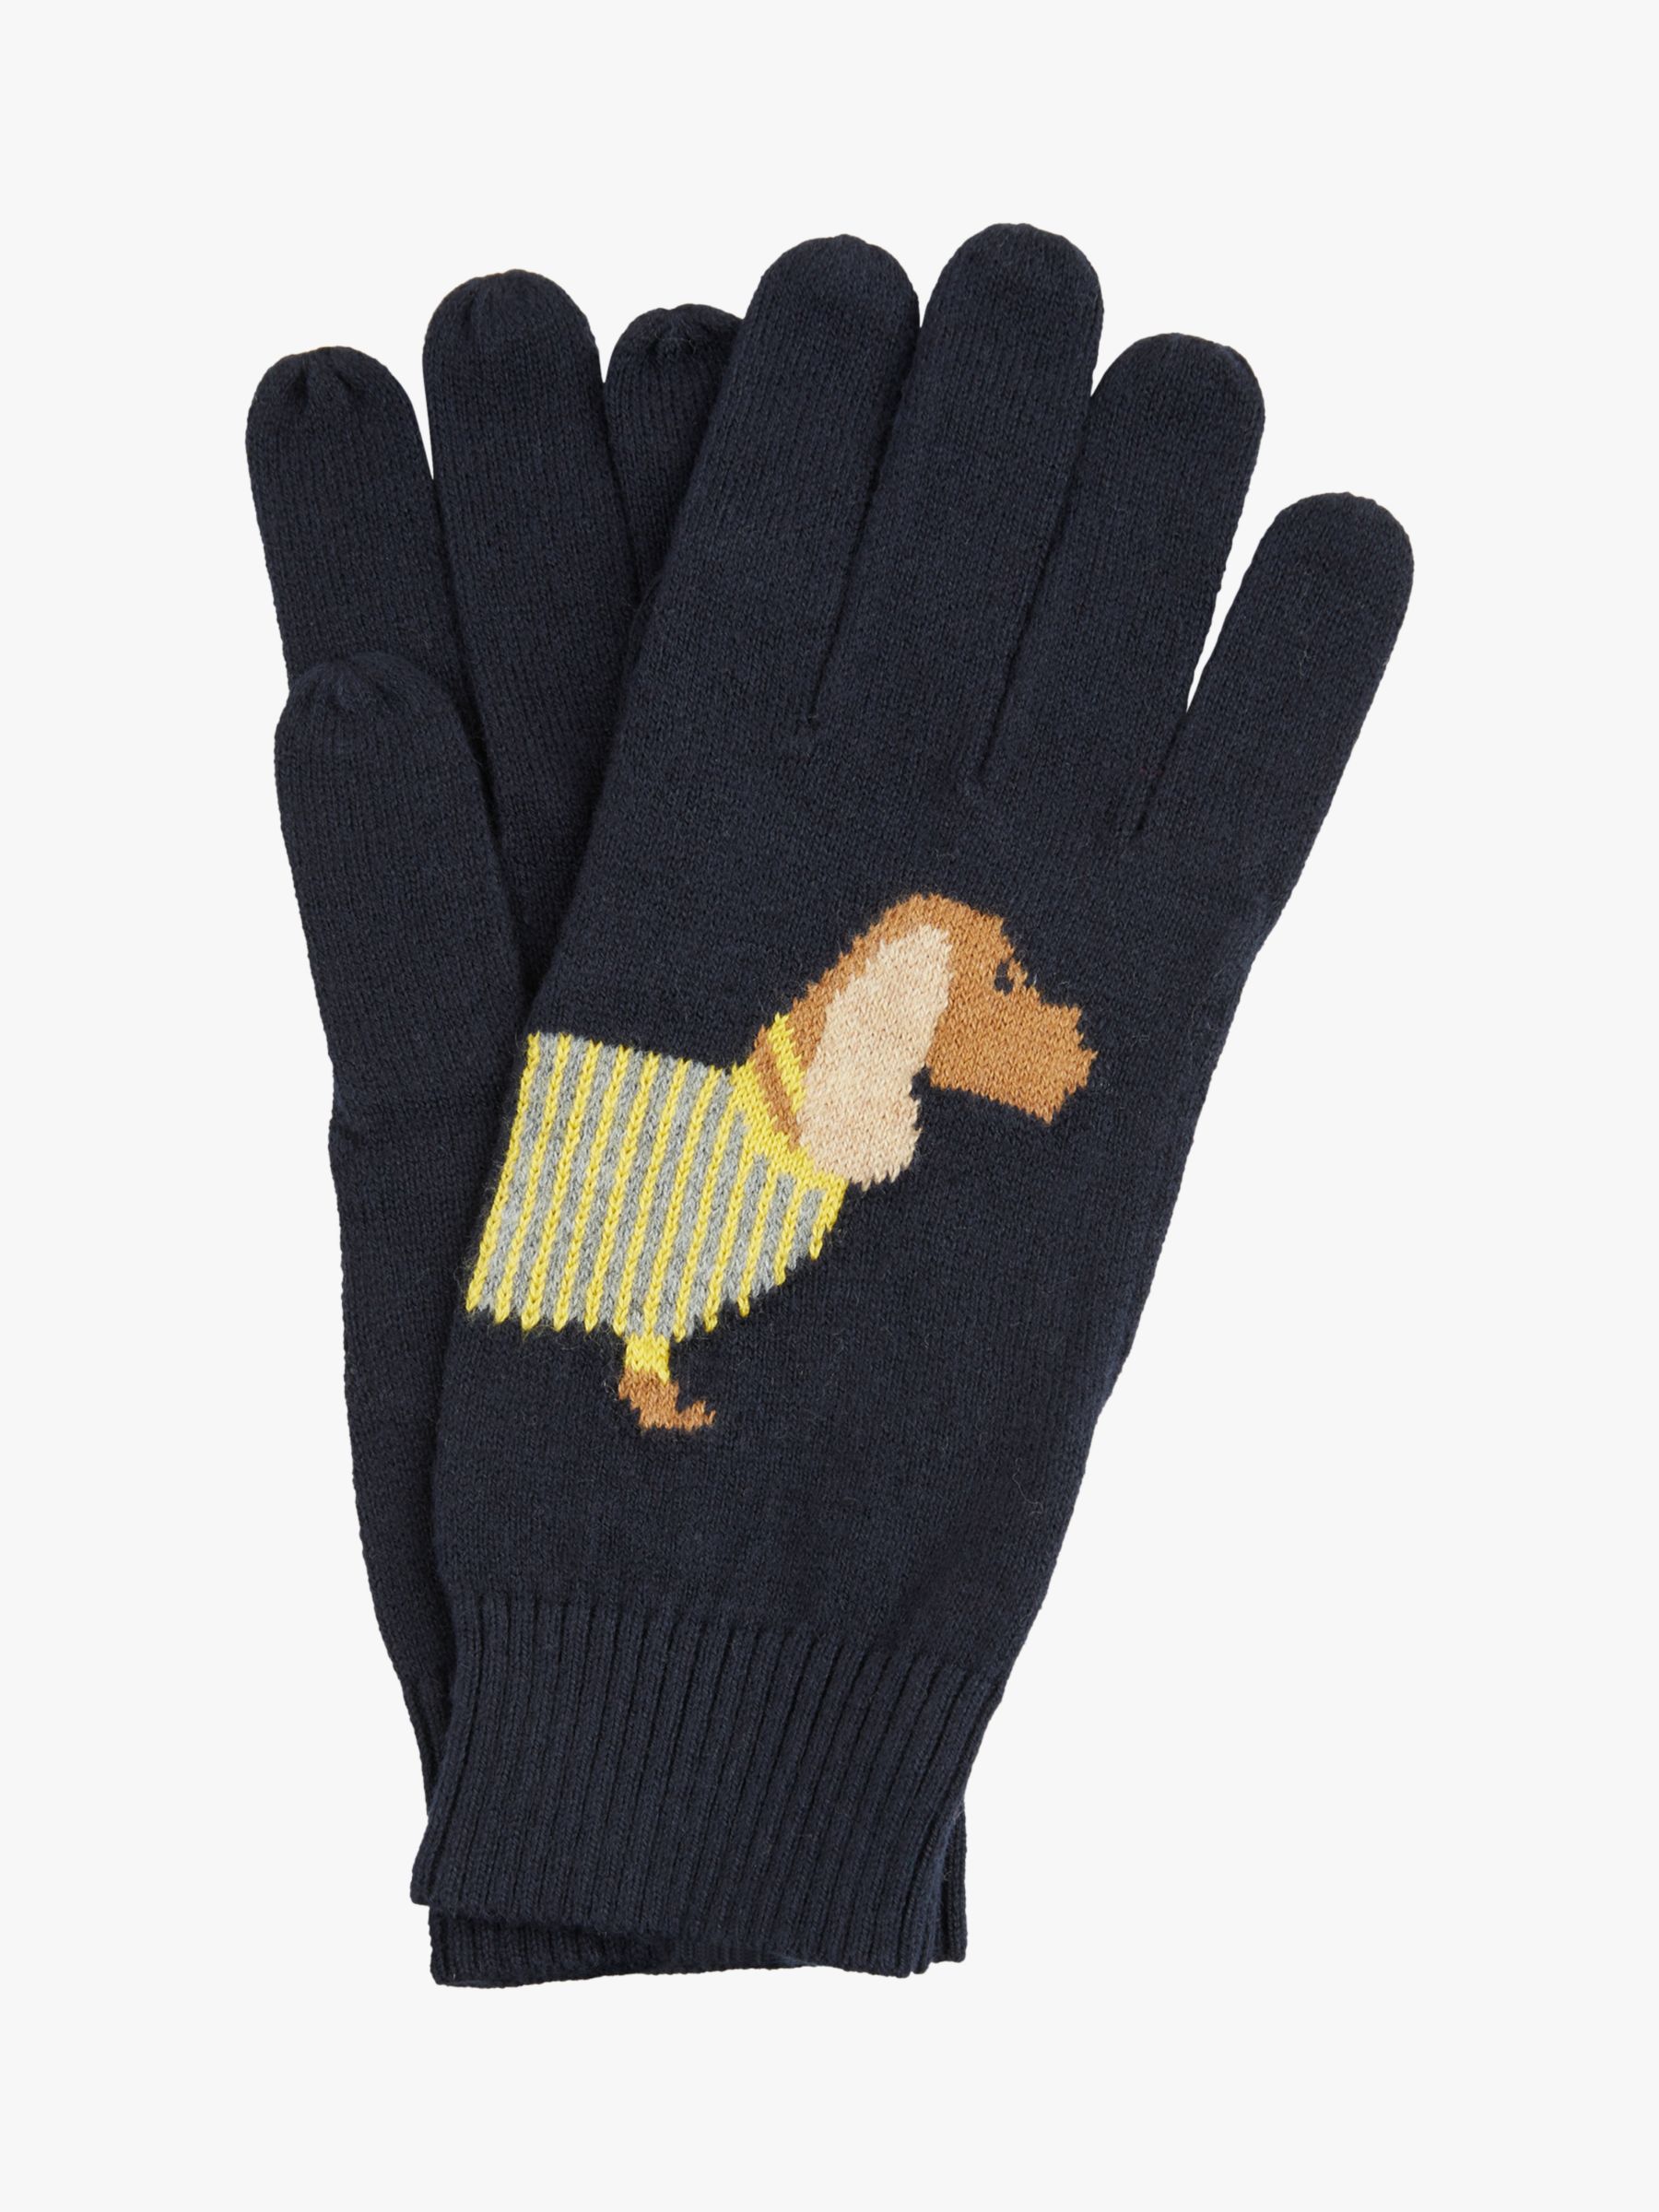 Hobbs Dachshund Knitted Gloves